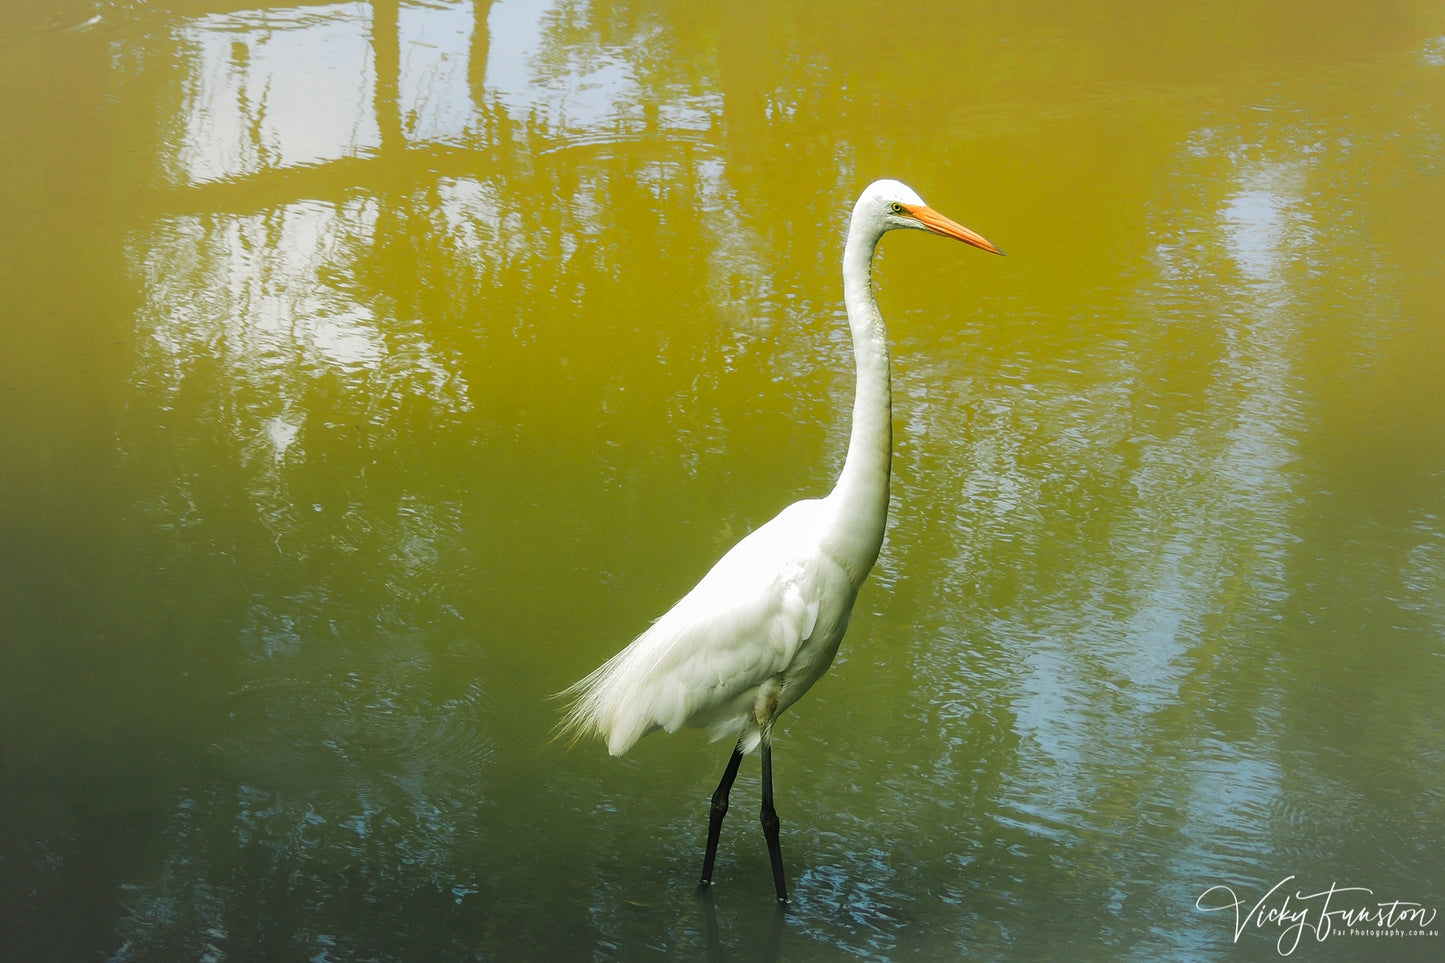 Eastern Great Egret